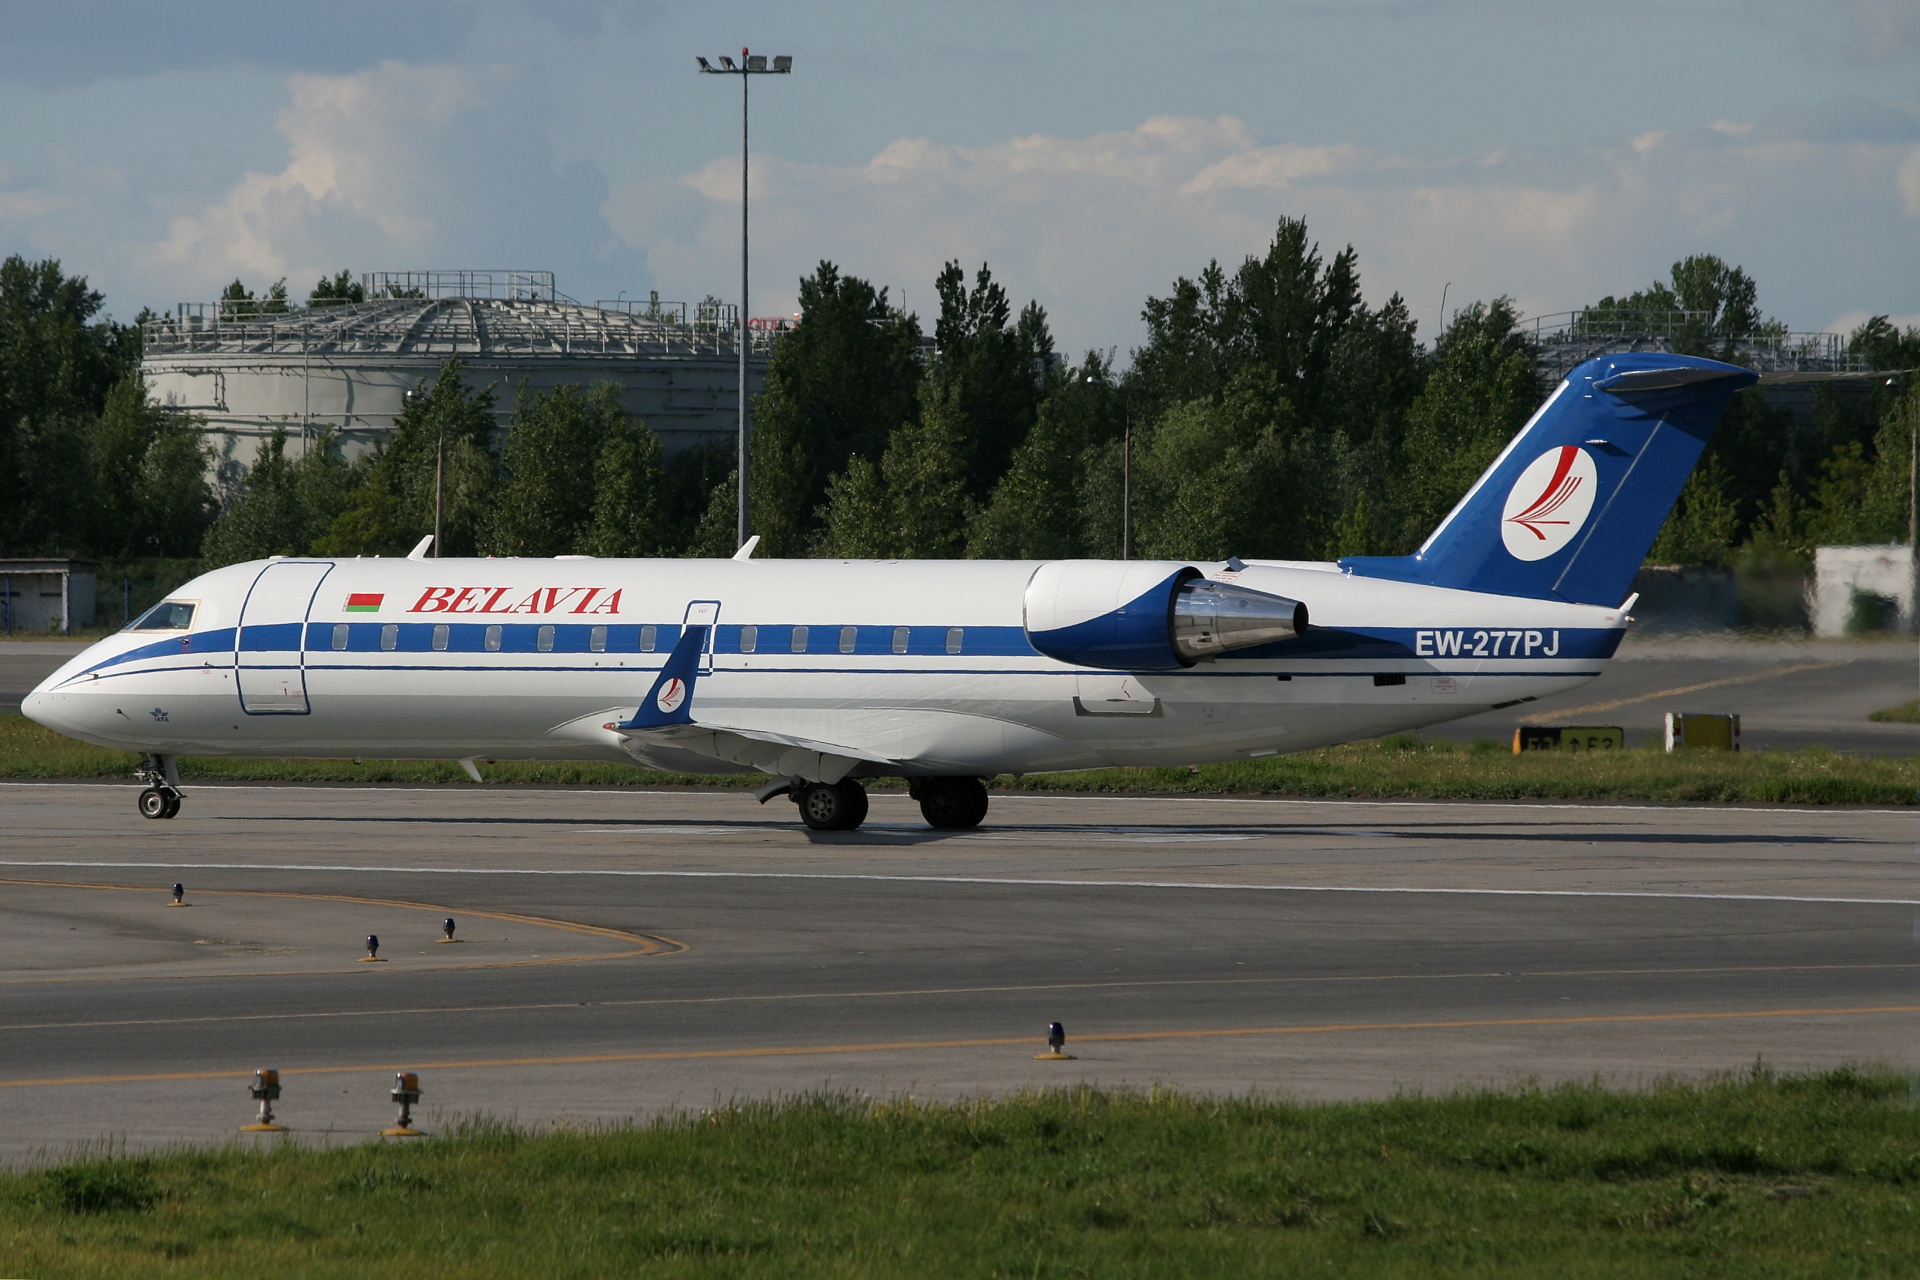 EW-277PJ, Belavia (Aircraft » EPWA Spotting » Bombardier CL-600 Regional Jet » CRJ-200)